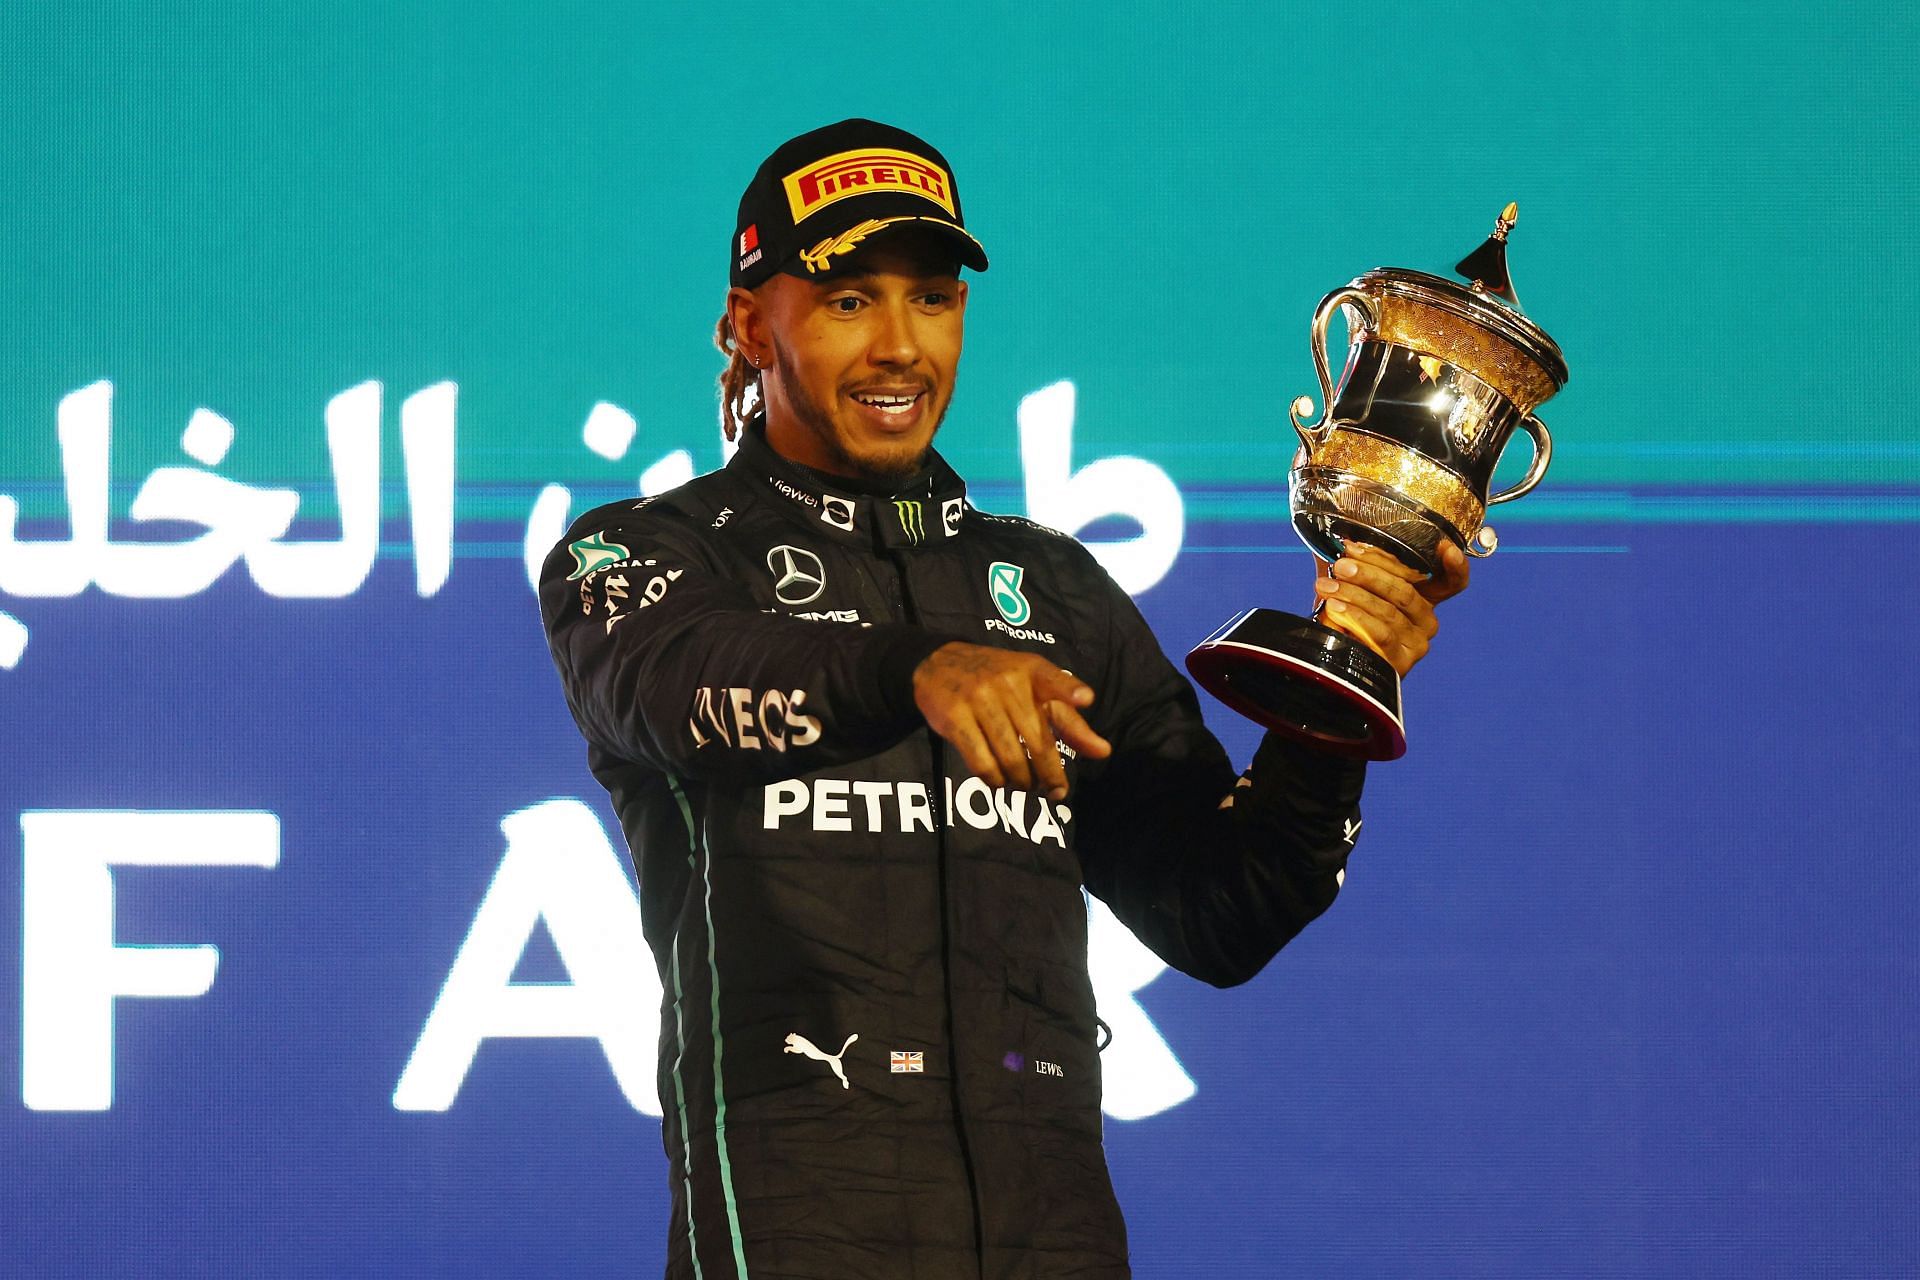 Lewis Hamilton on 3rd place podium at Bahrain Grand Prix 2022. (Image via Lars Baron/Getty Images)